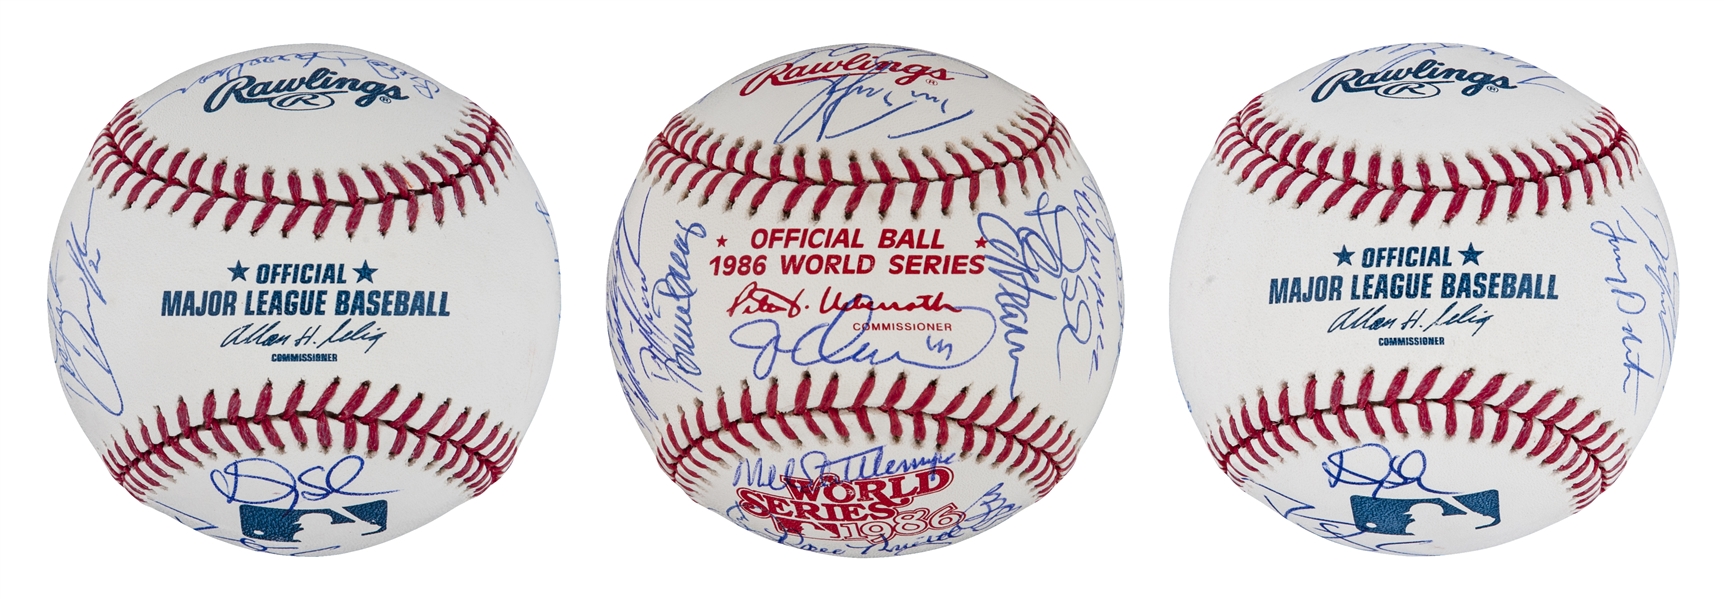 Rawlings Official 1986 World Series Baseball (New York Mets vs